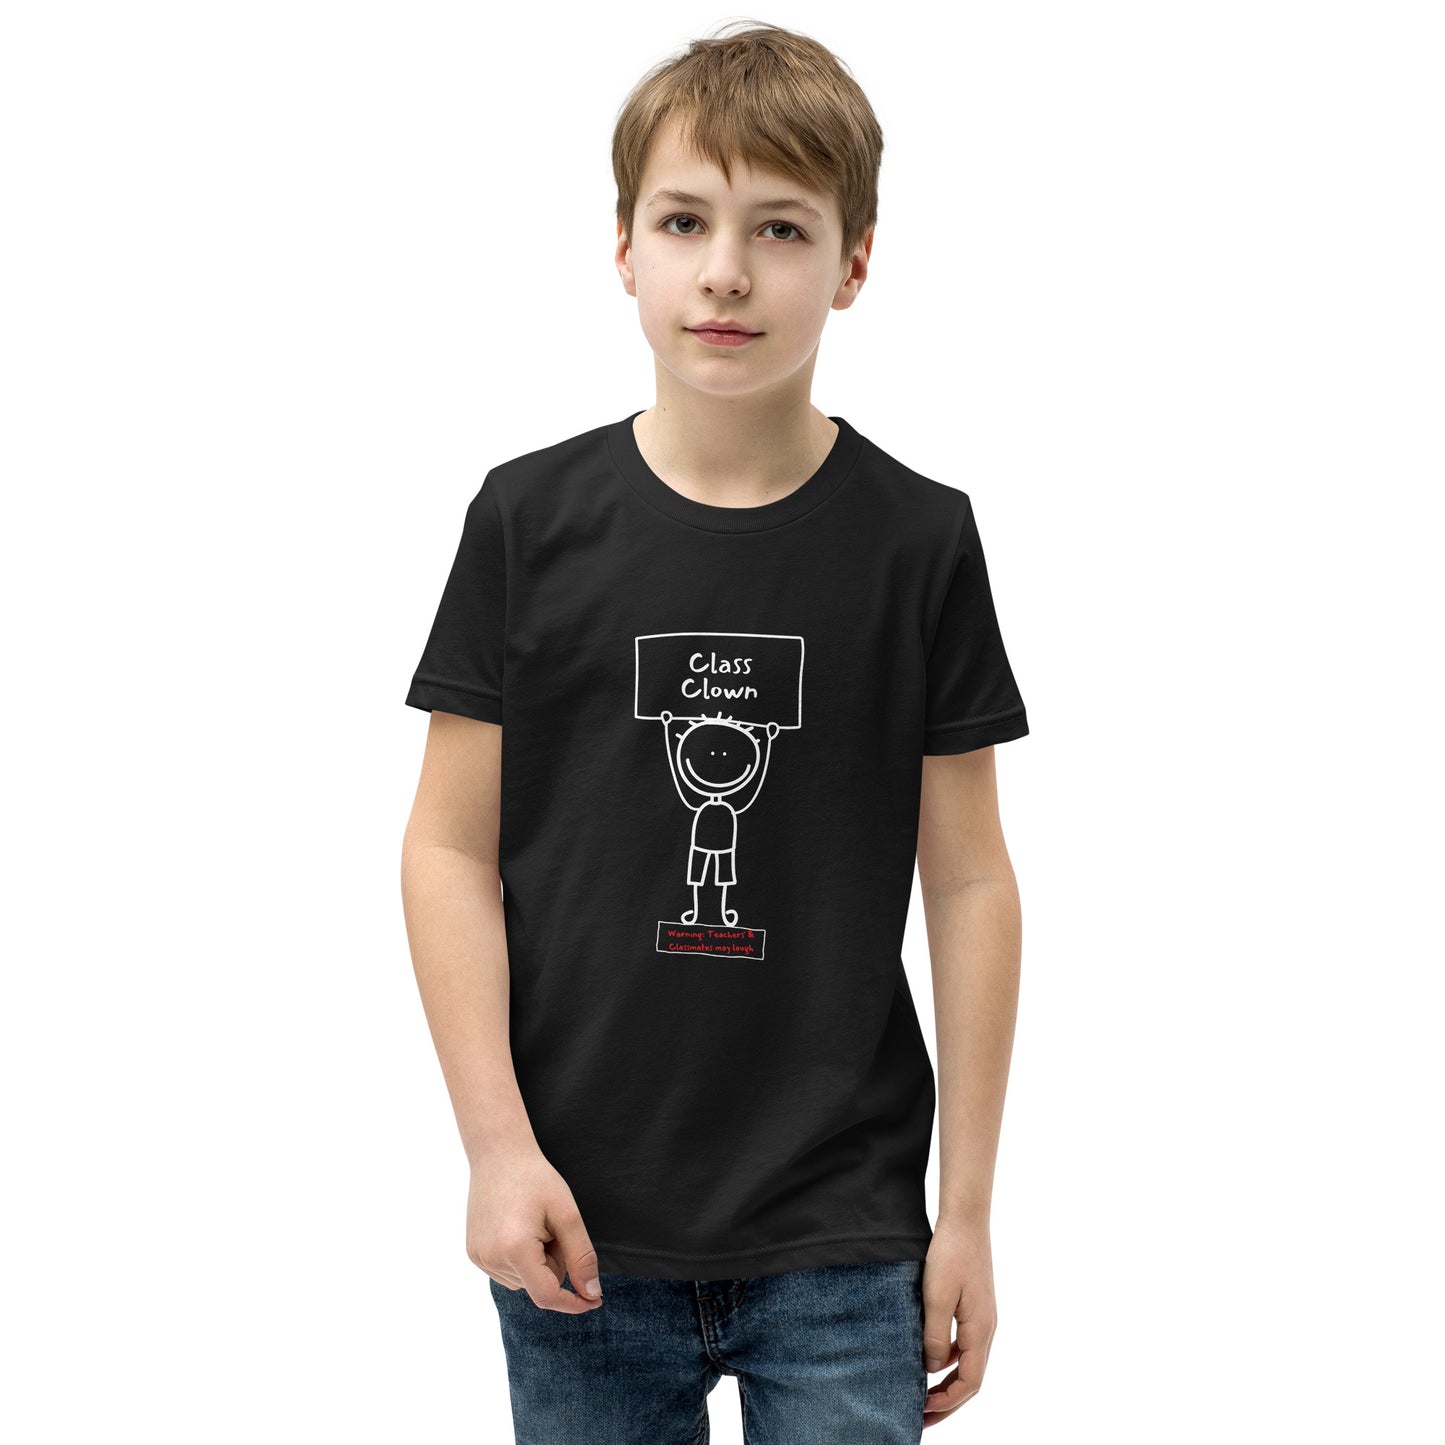 Class Clown (niño) - Camiseta juvenil